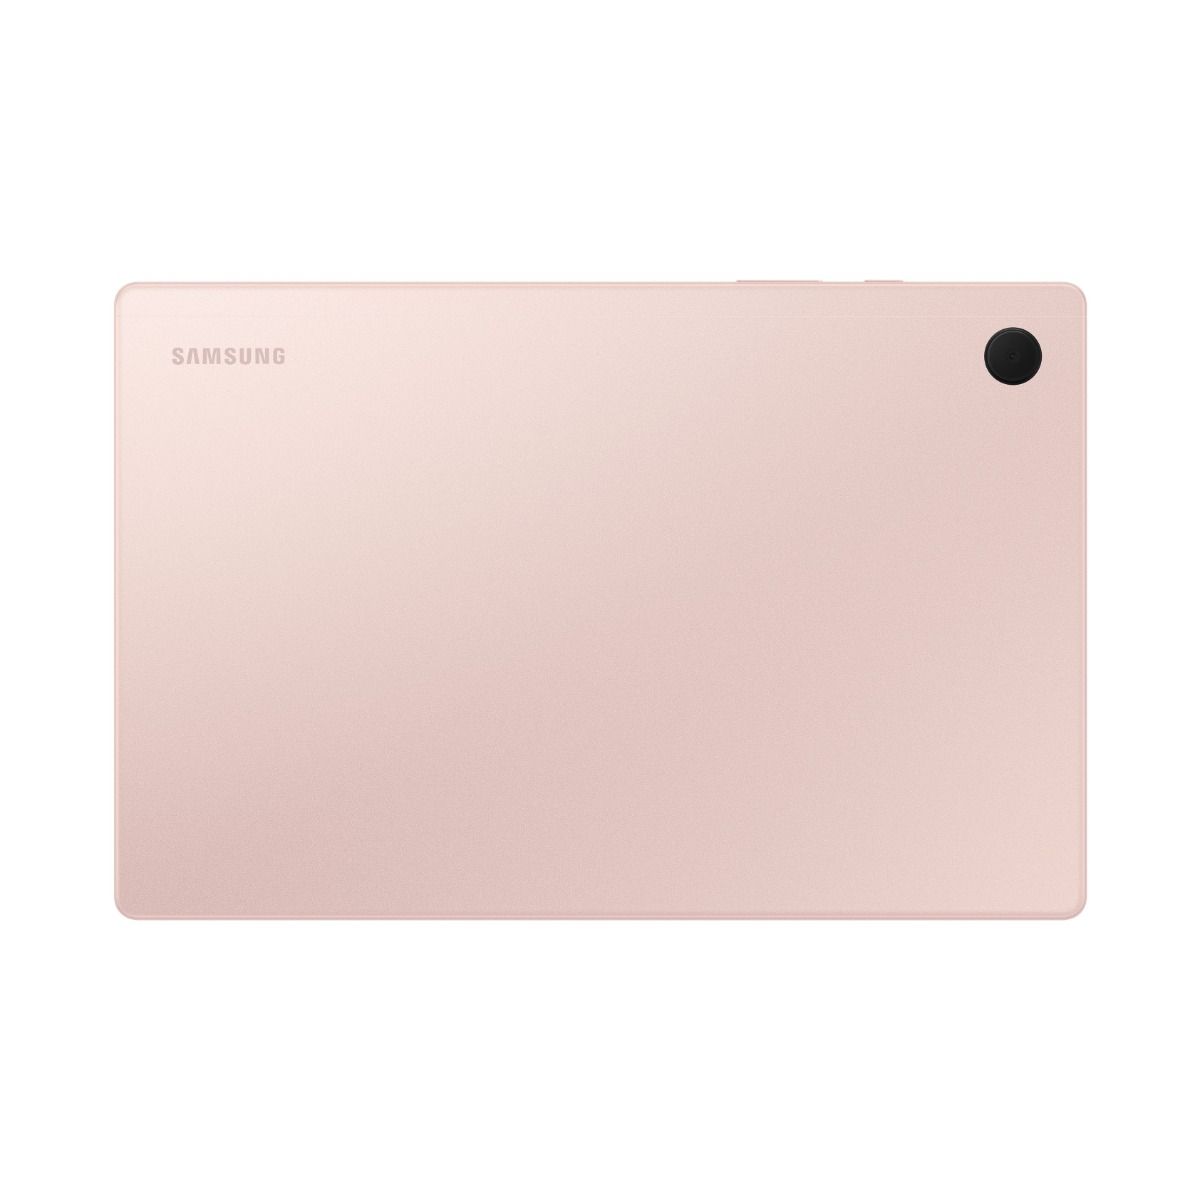 Samsung Galaxy Tab A8 WiFi 10.5" Tablet 3GB RAM 32GB Storage Pink Gold Android